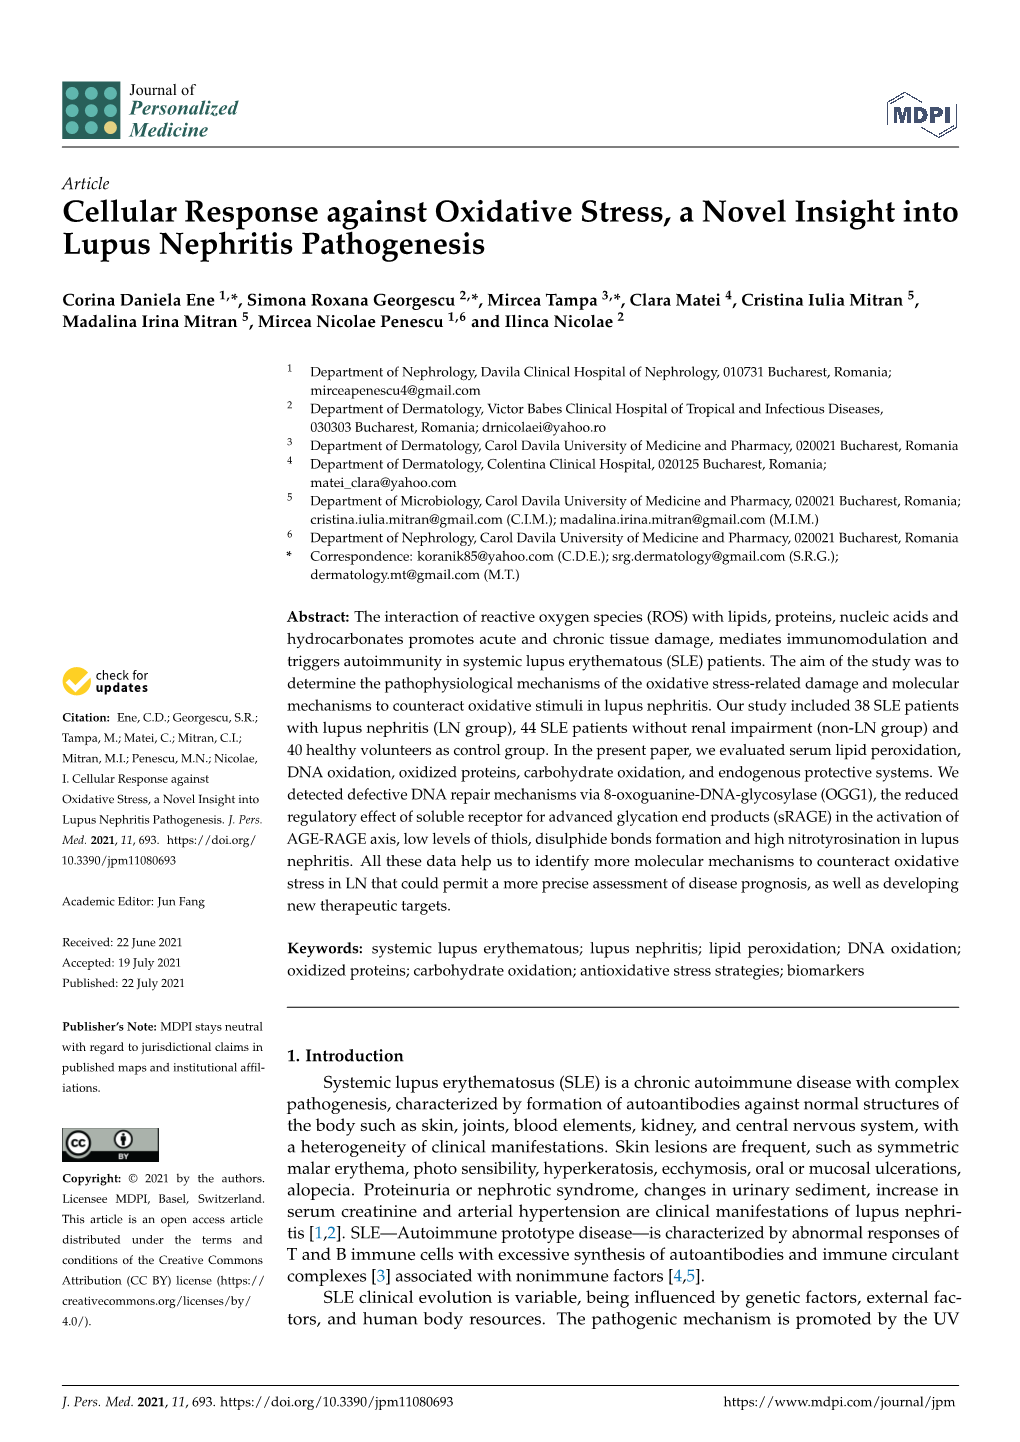 Cellular Response Against Oxidative Stress, a Novel Insight Into Lupus Nephritis Pathogenesis